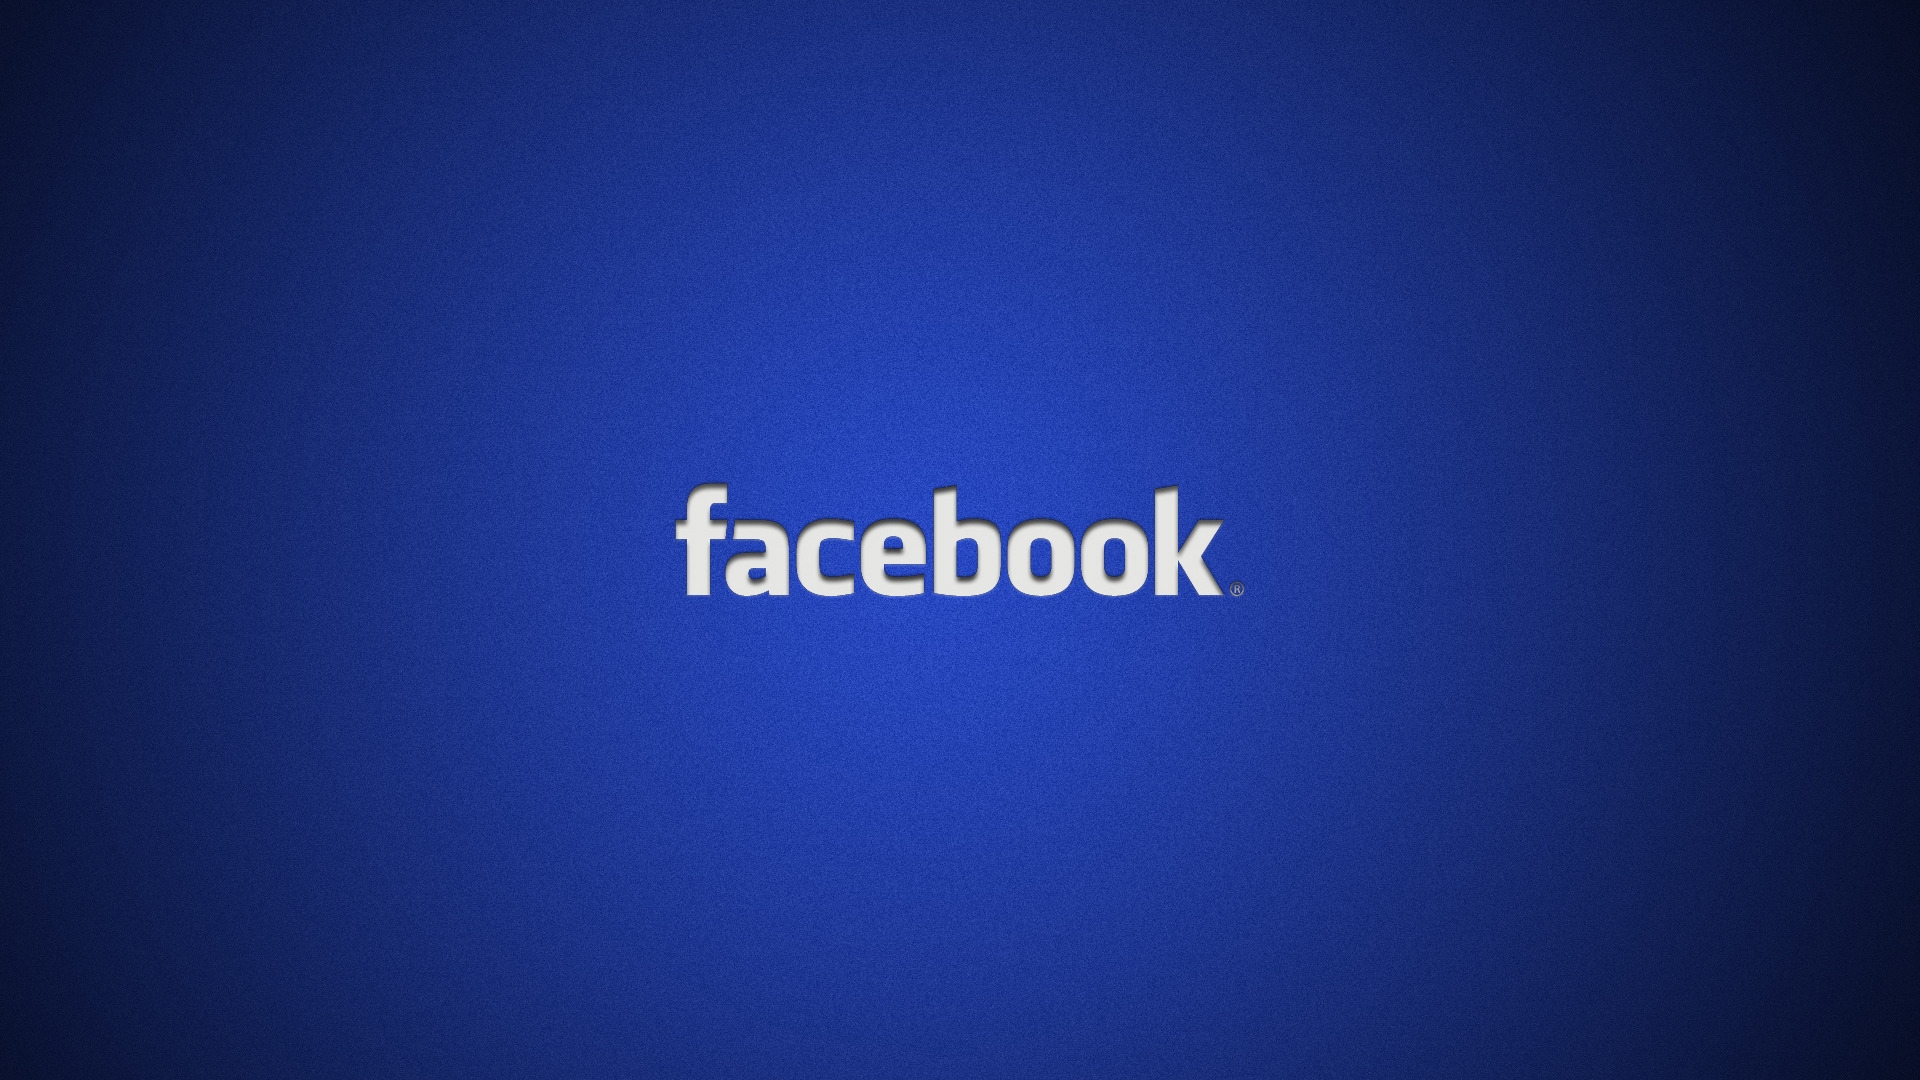 Facebook Logo for 1920 x 1080 HDTV 1080p resolution